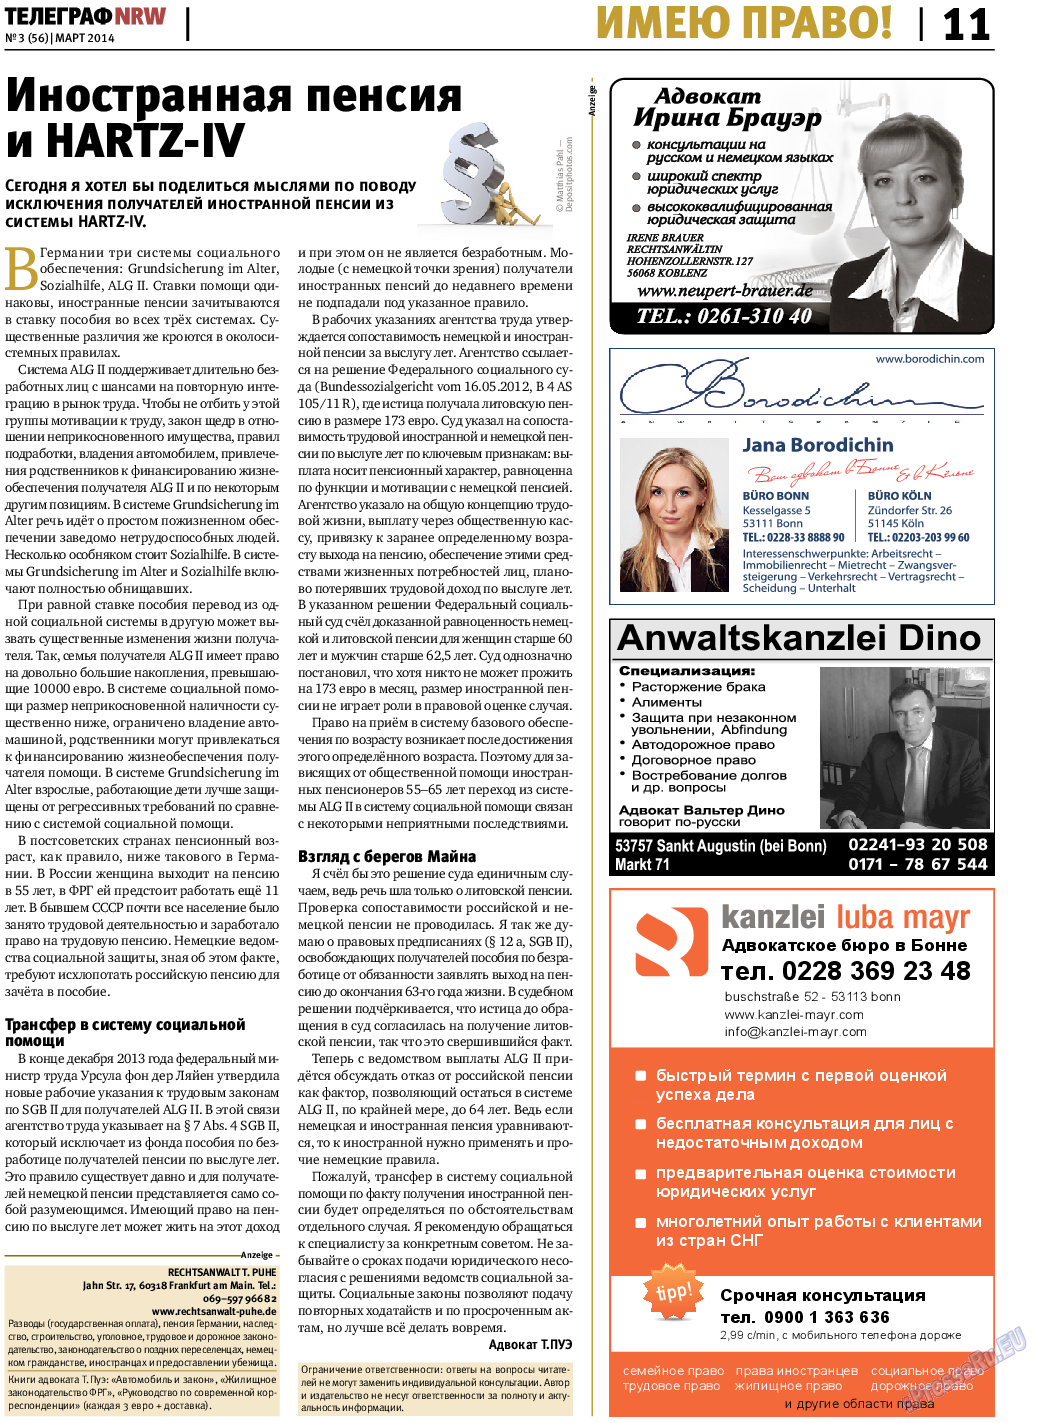 Телеграф NRW, газета. 2014 №3 стр.11